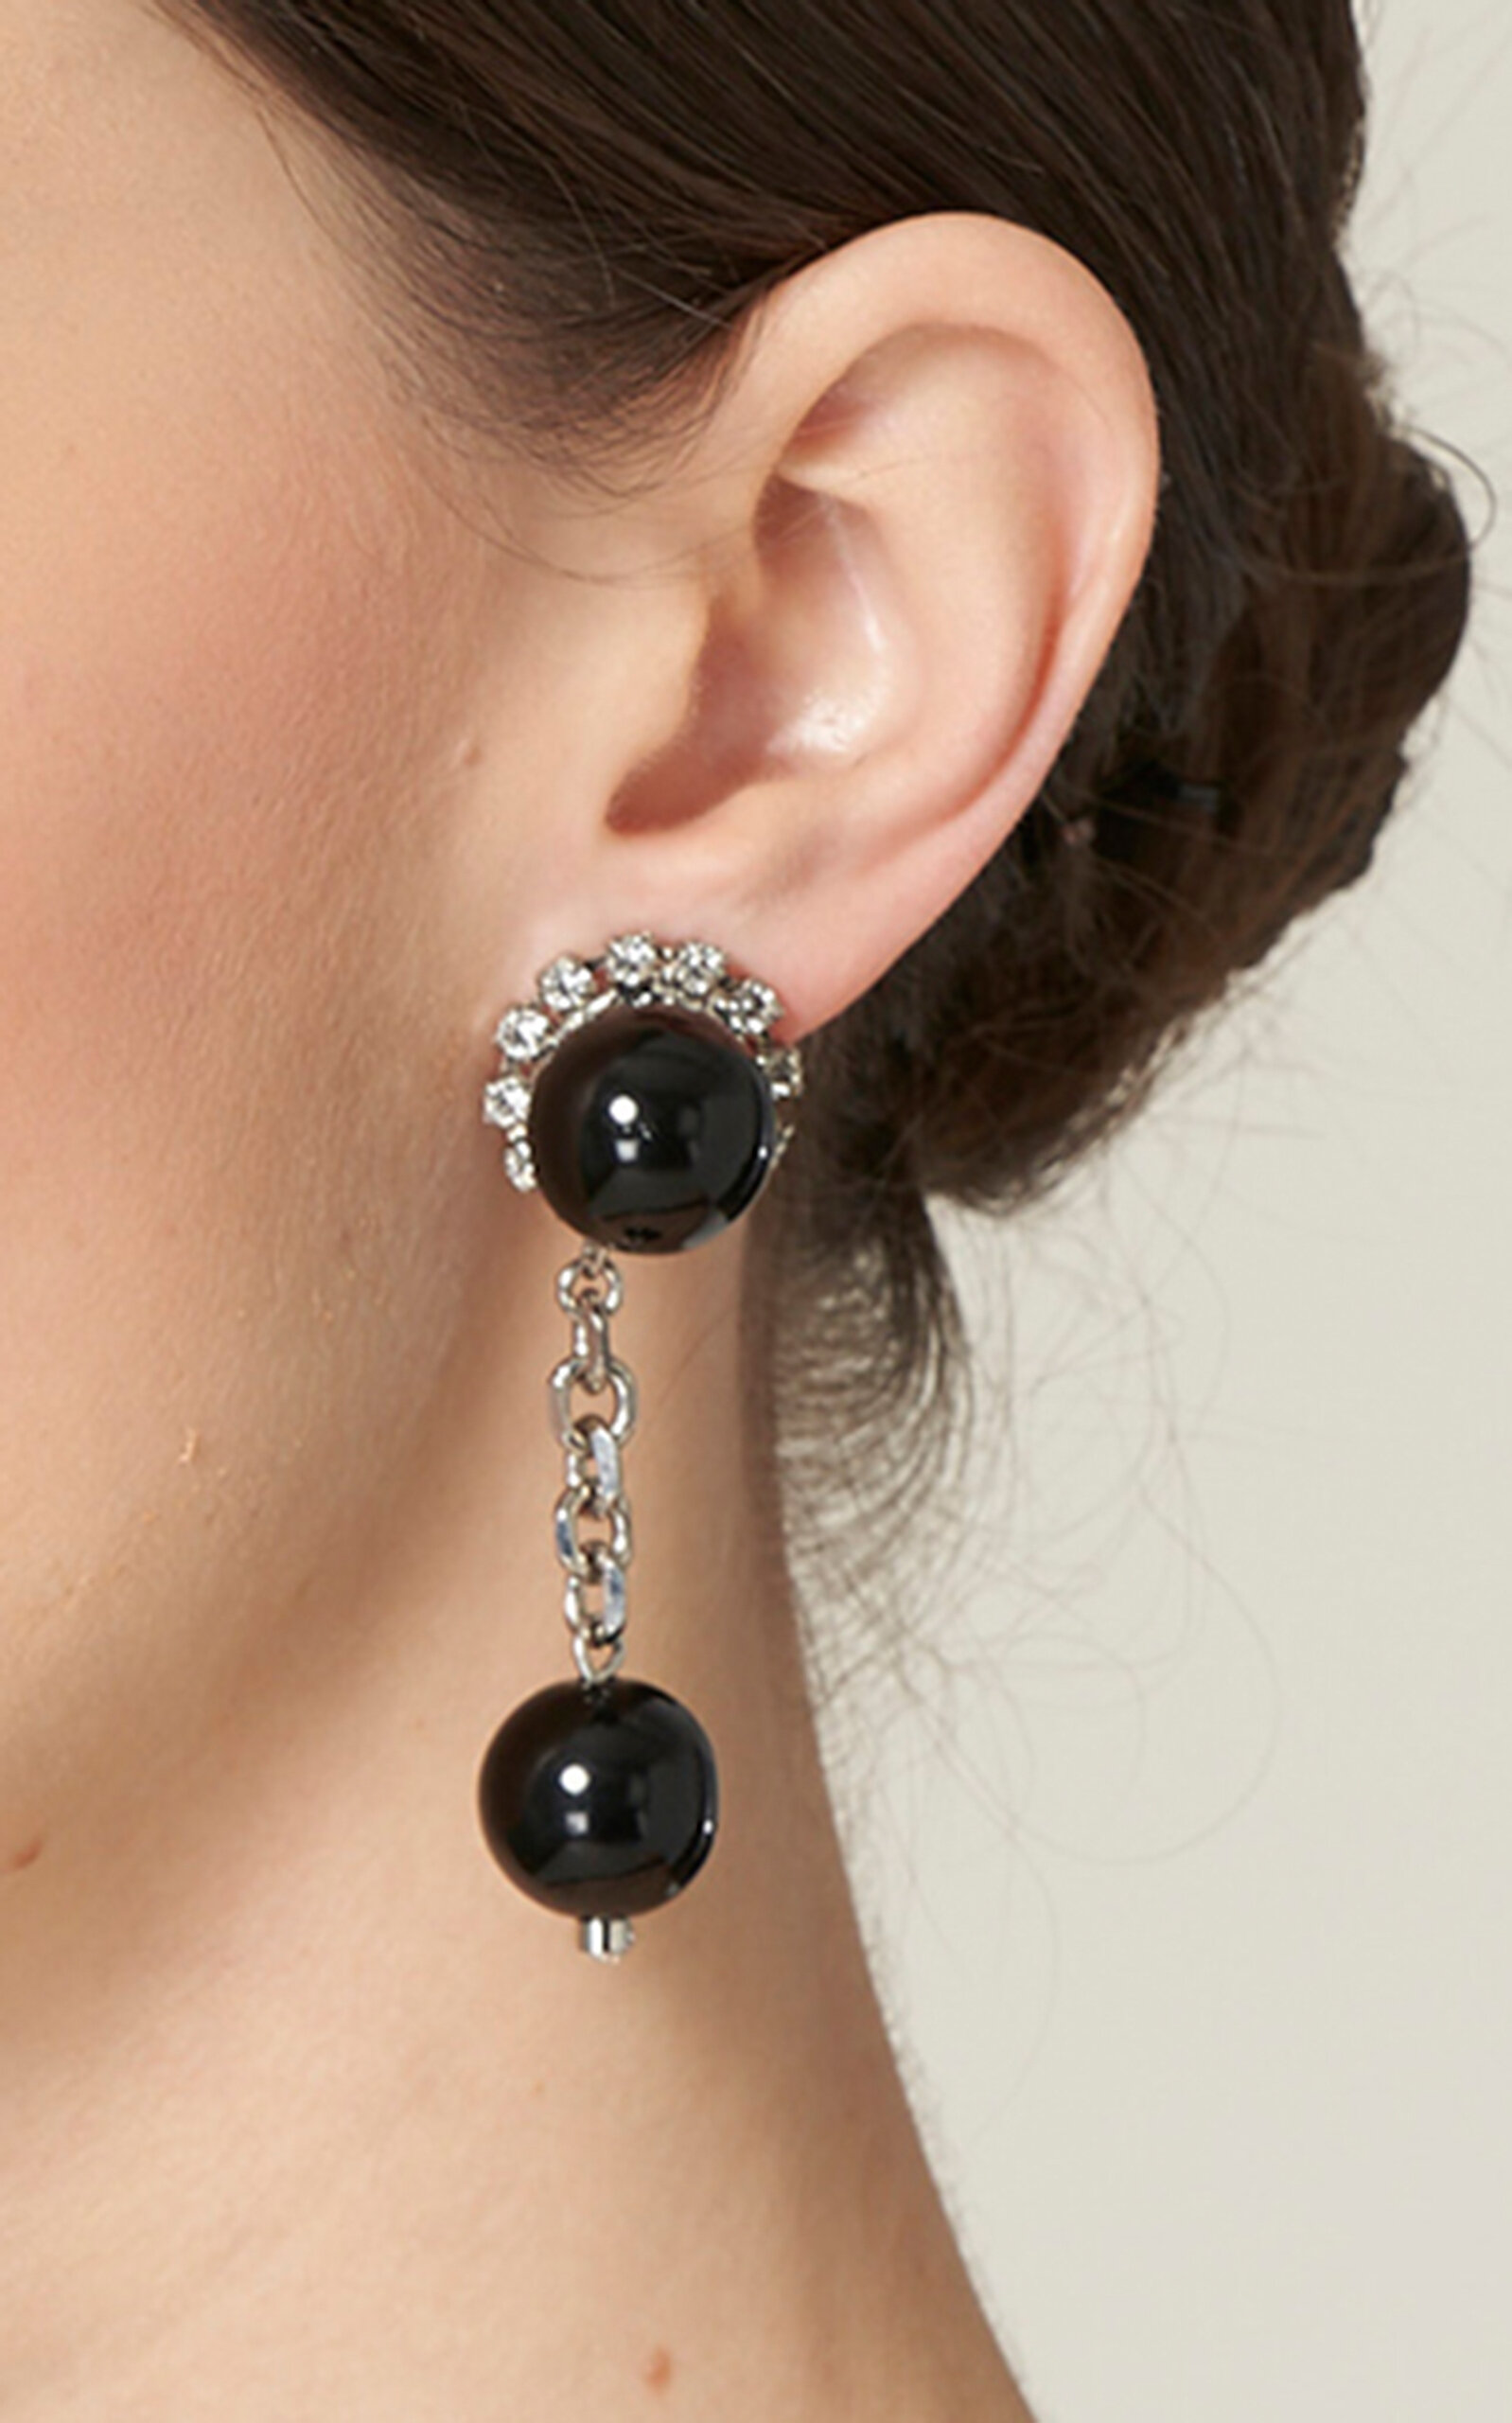 Carolina Herrera - Women's Contessa Bead Earrings - Black - OS - Only At Moda Operandi - Gifts For Her